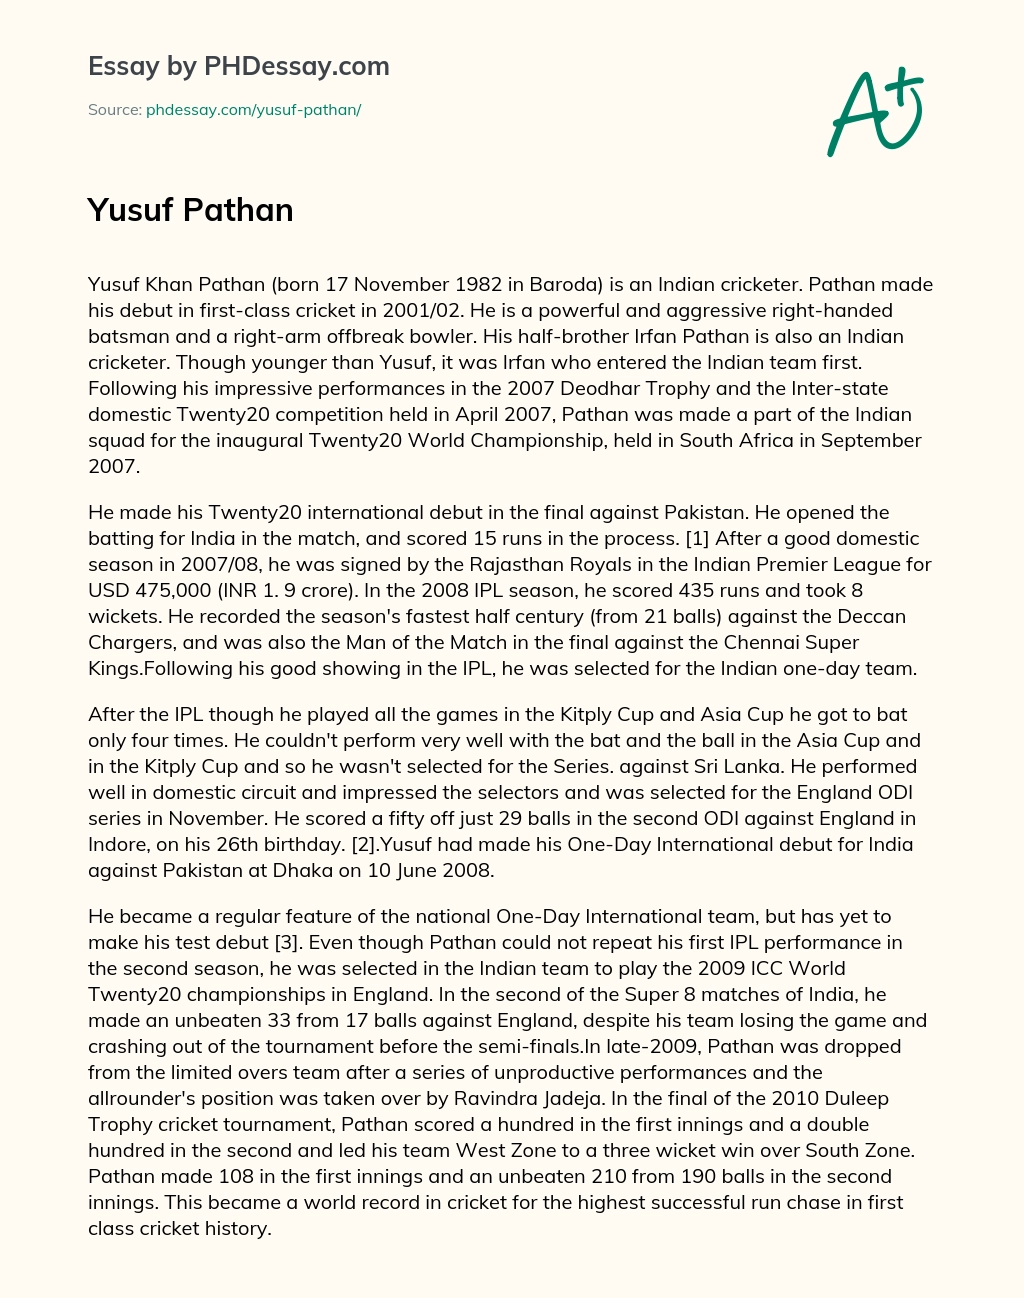 Yusuf Pathan essay